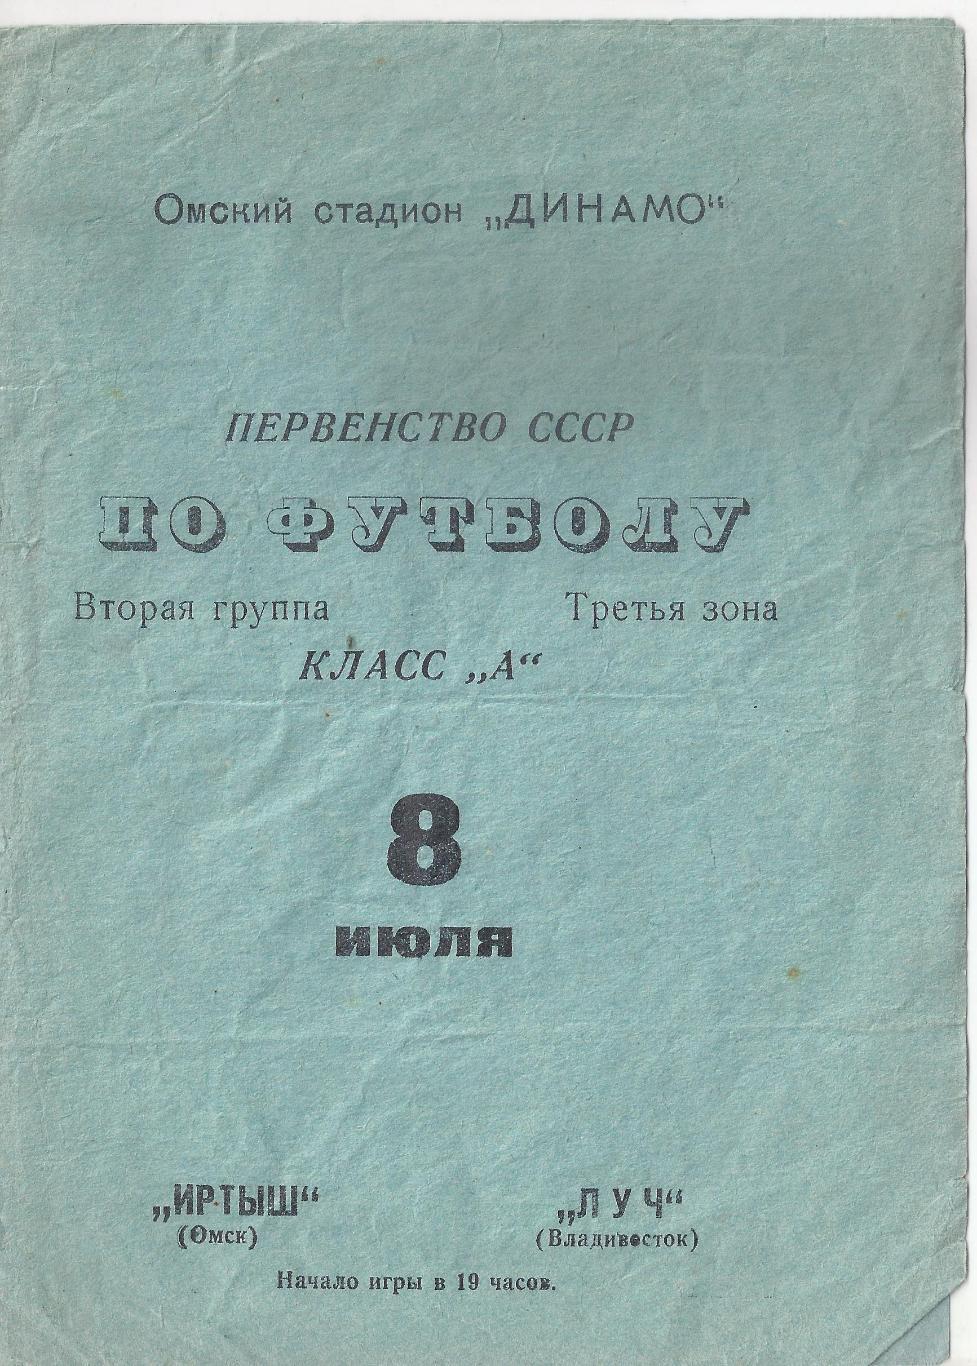 1970 - Иртыш Омск - Луч Владивосток